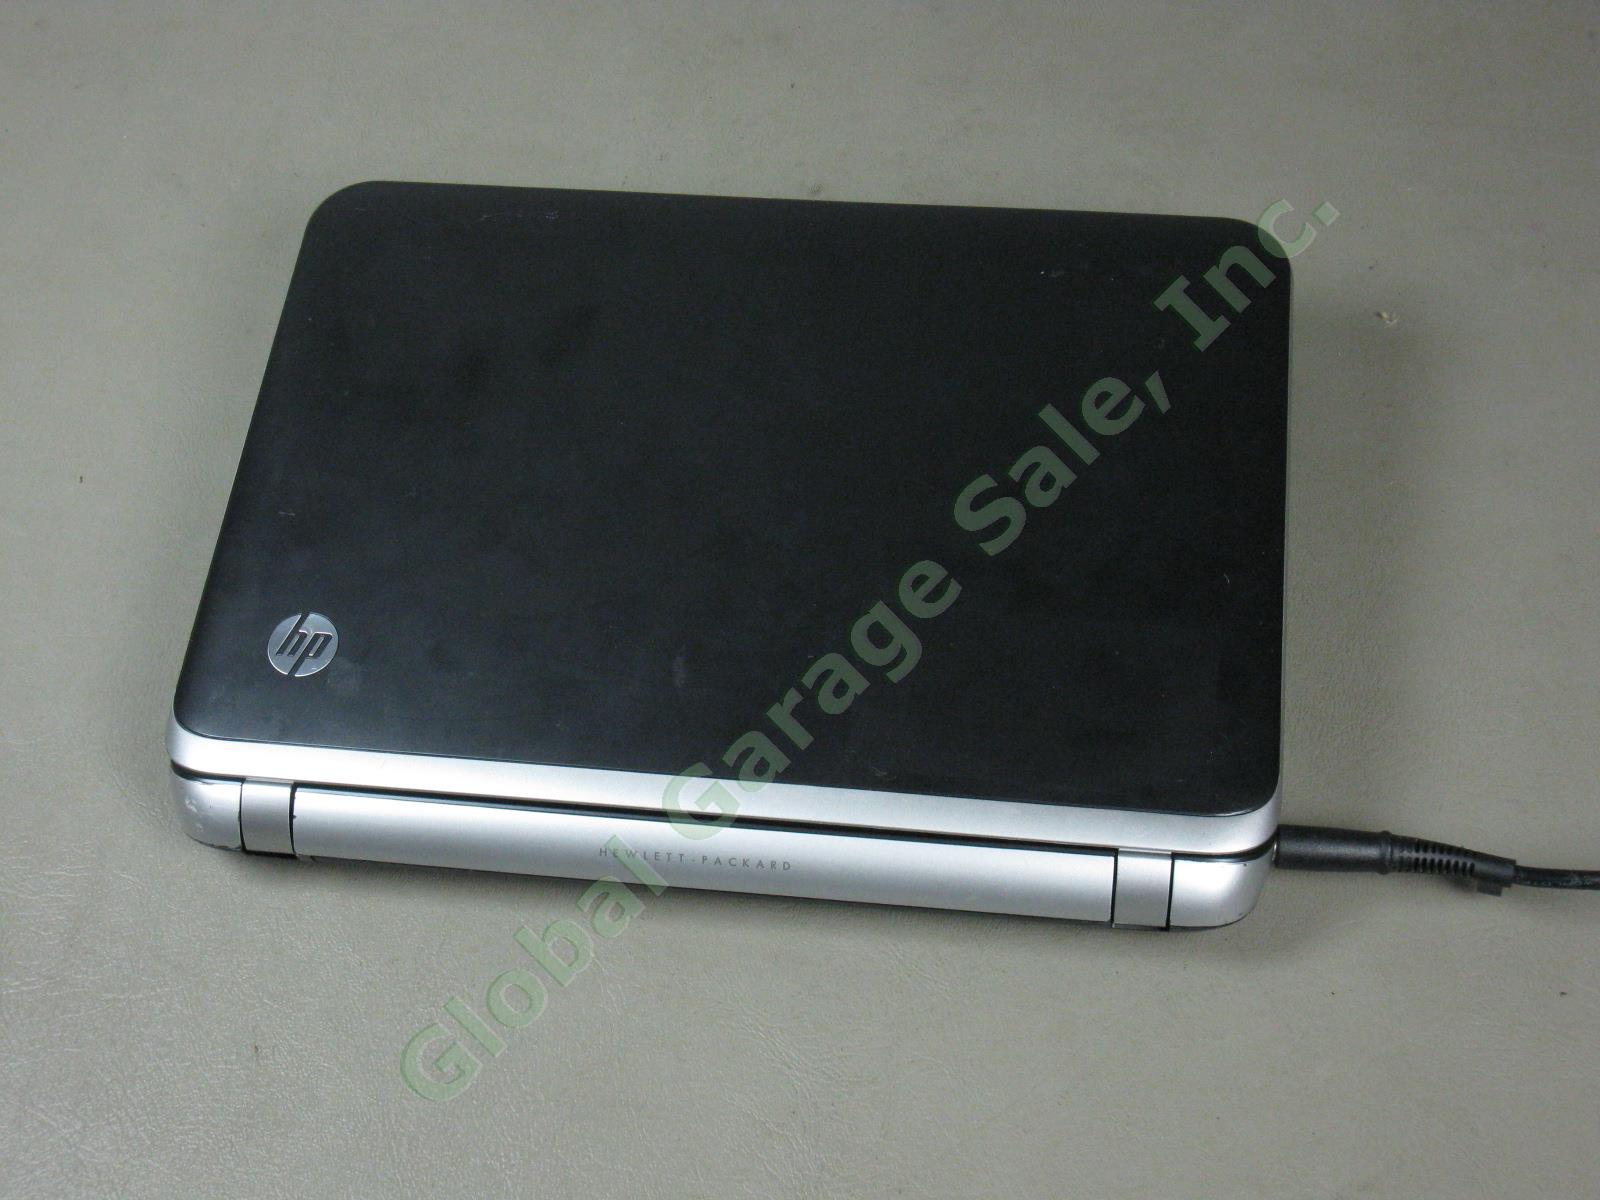 HP 3115m 11.6" Notebook Laptop Computer 1.65GHz 4GB 320GB Windows 7 Beats Audio 3